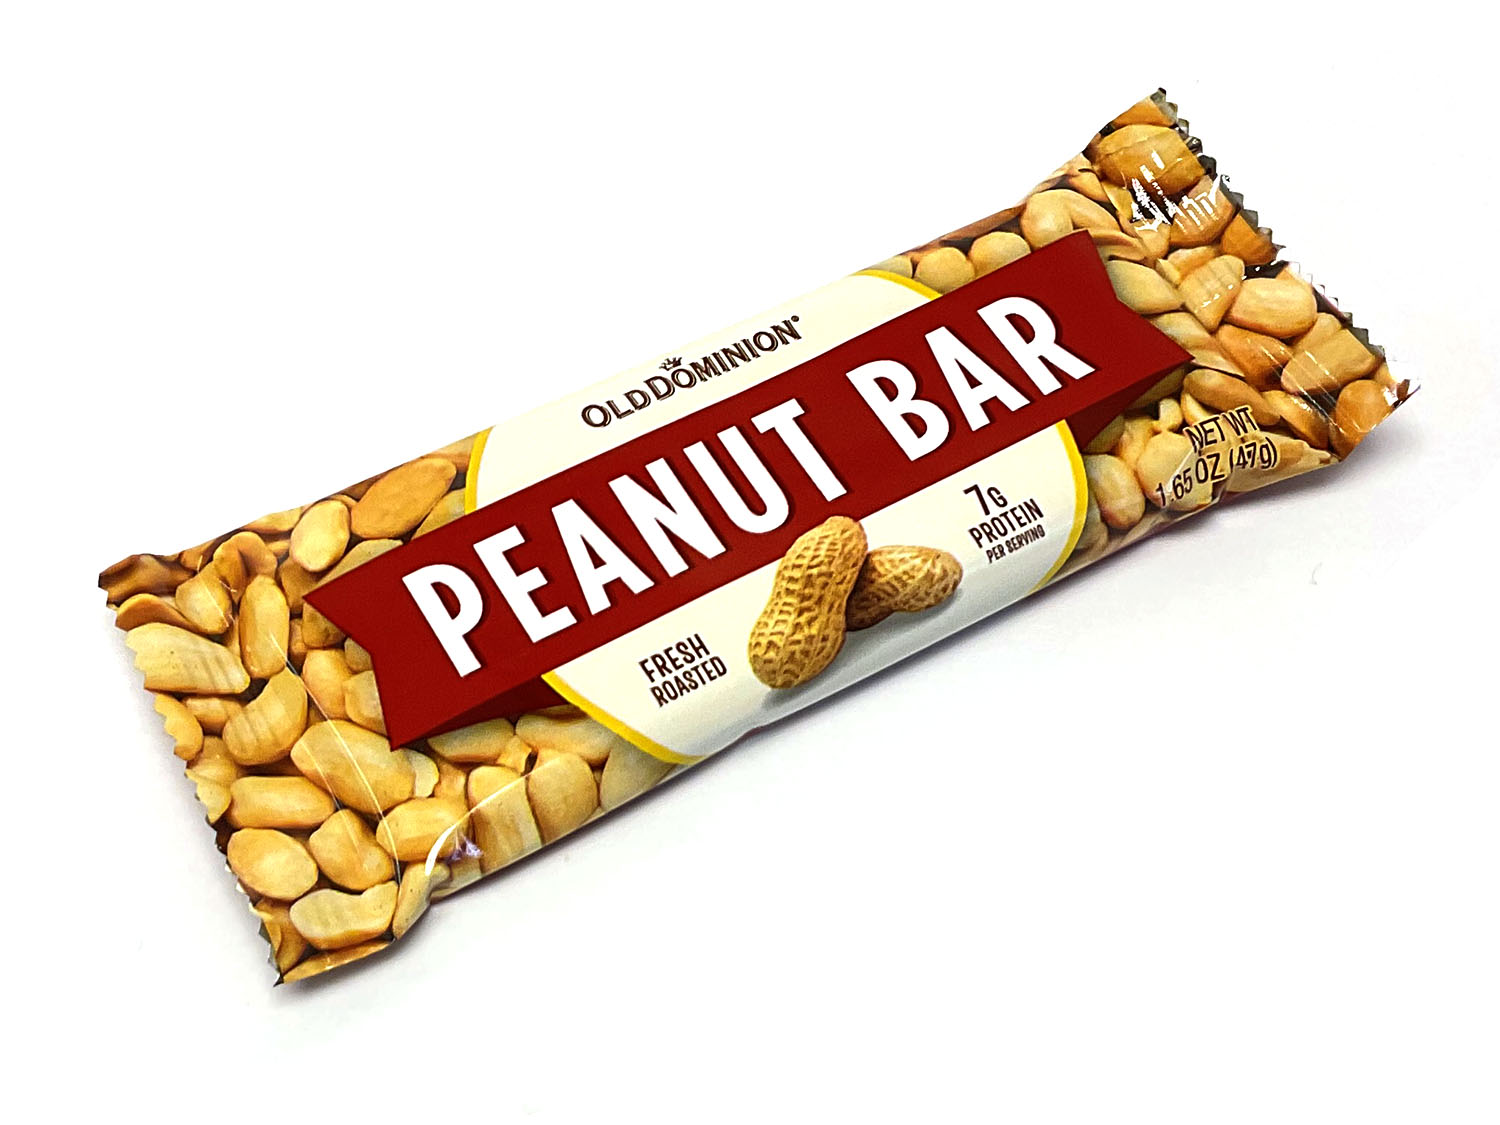 Peanut Bars by Old Dominion - 1.65 oz bar